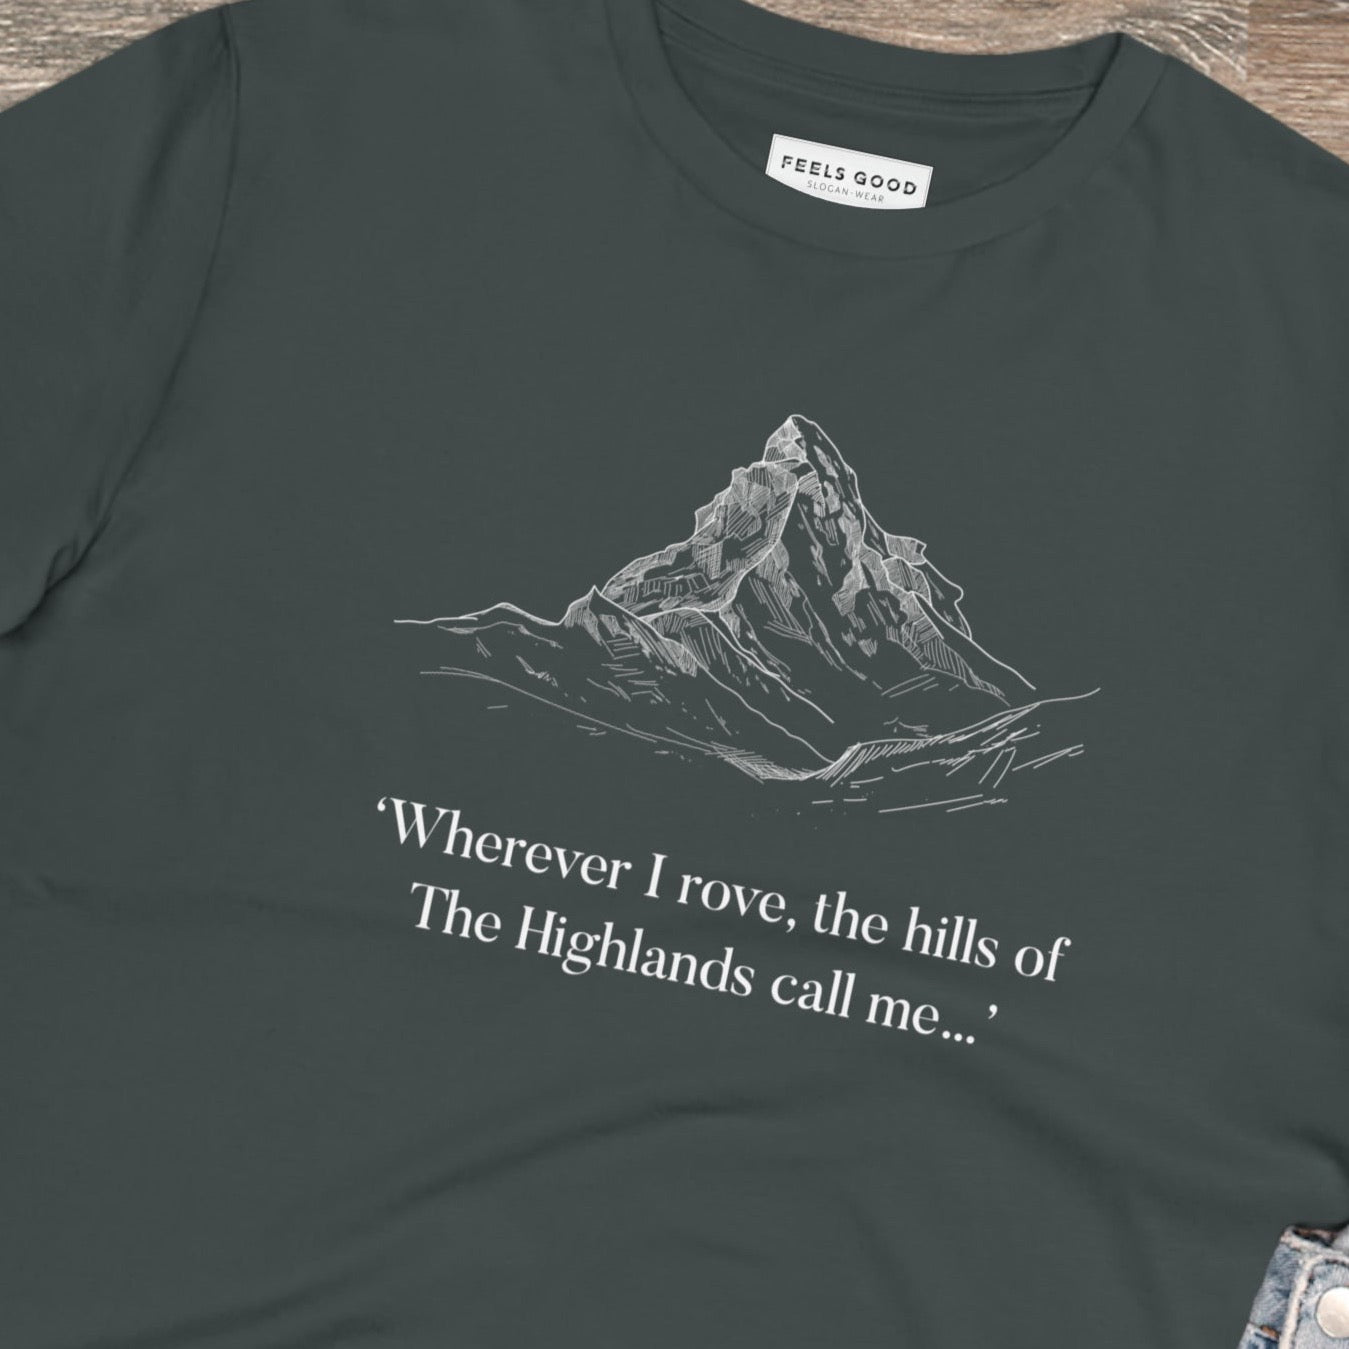 Scotland 'Hills Of The Highlands' Organic Cotton T-shirt - Eco Tshirt